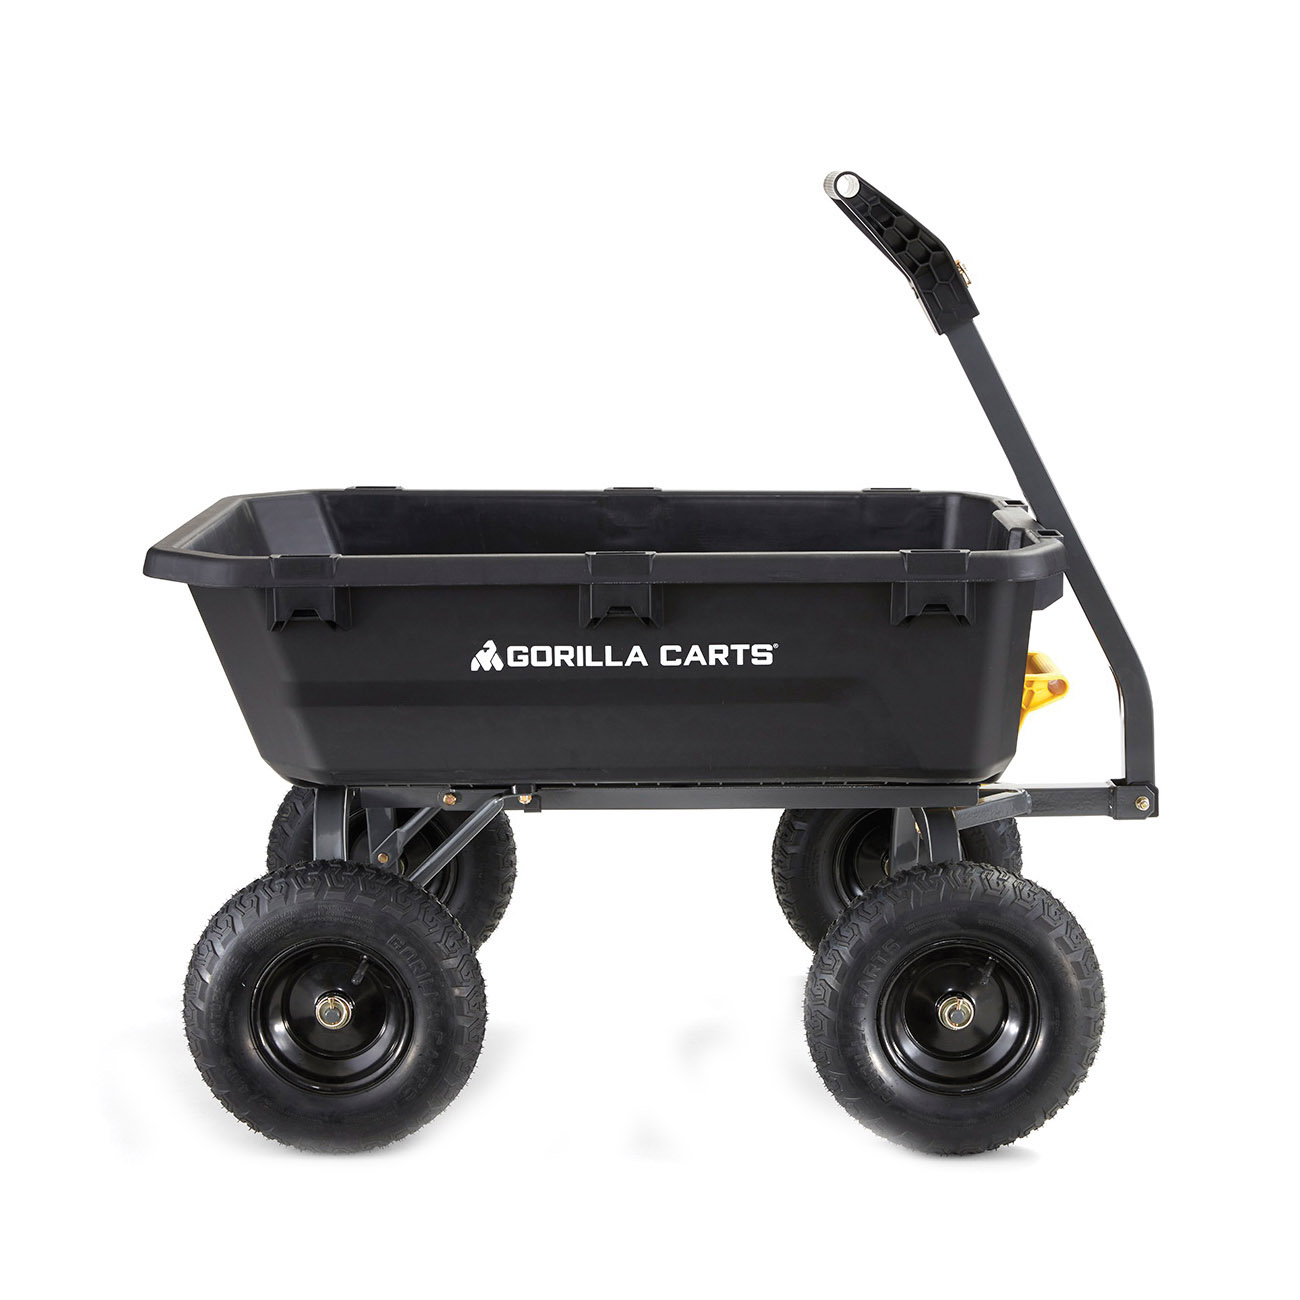 Gorilla Carts GCG-7 Yard Dump Cart, 1200 lb, 39-1/2 in L x 27 in W Deck, Poly Deck, 4-Wheel, 13 in Wheel, Black - 4